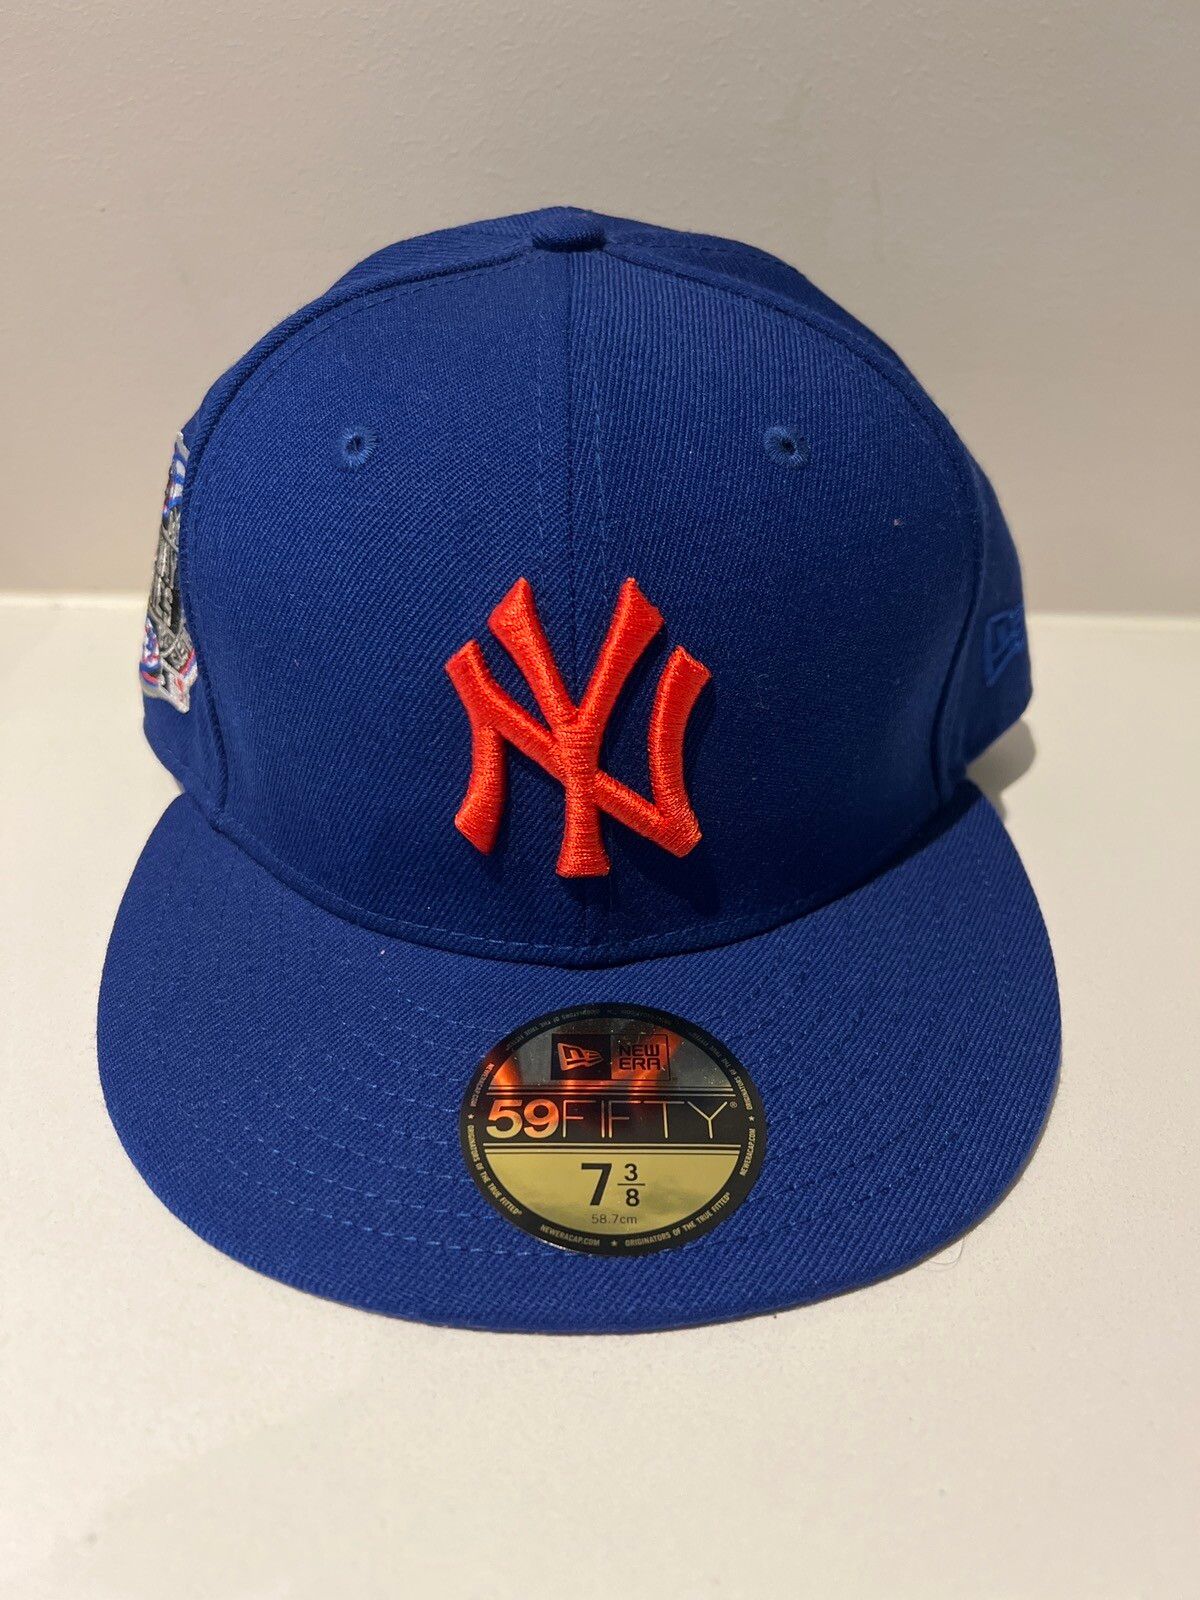 Kith Kith x New Era Subway Series Hat - 7 3/8 | Grailed